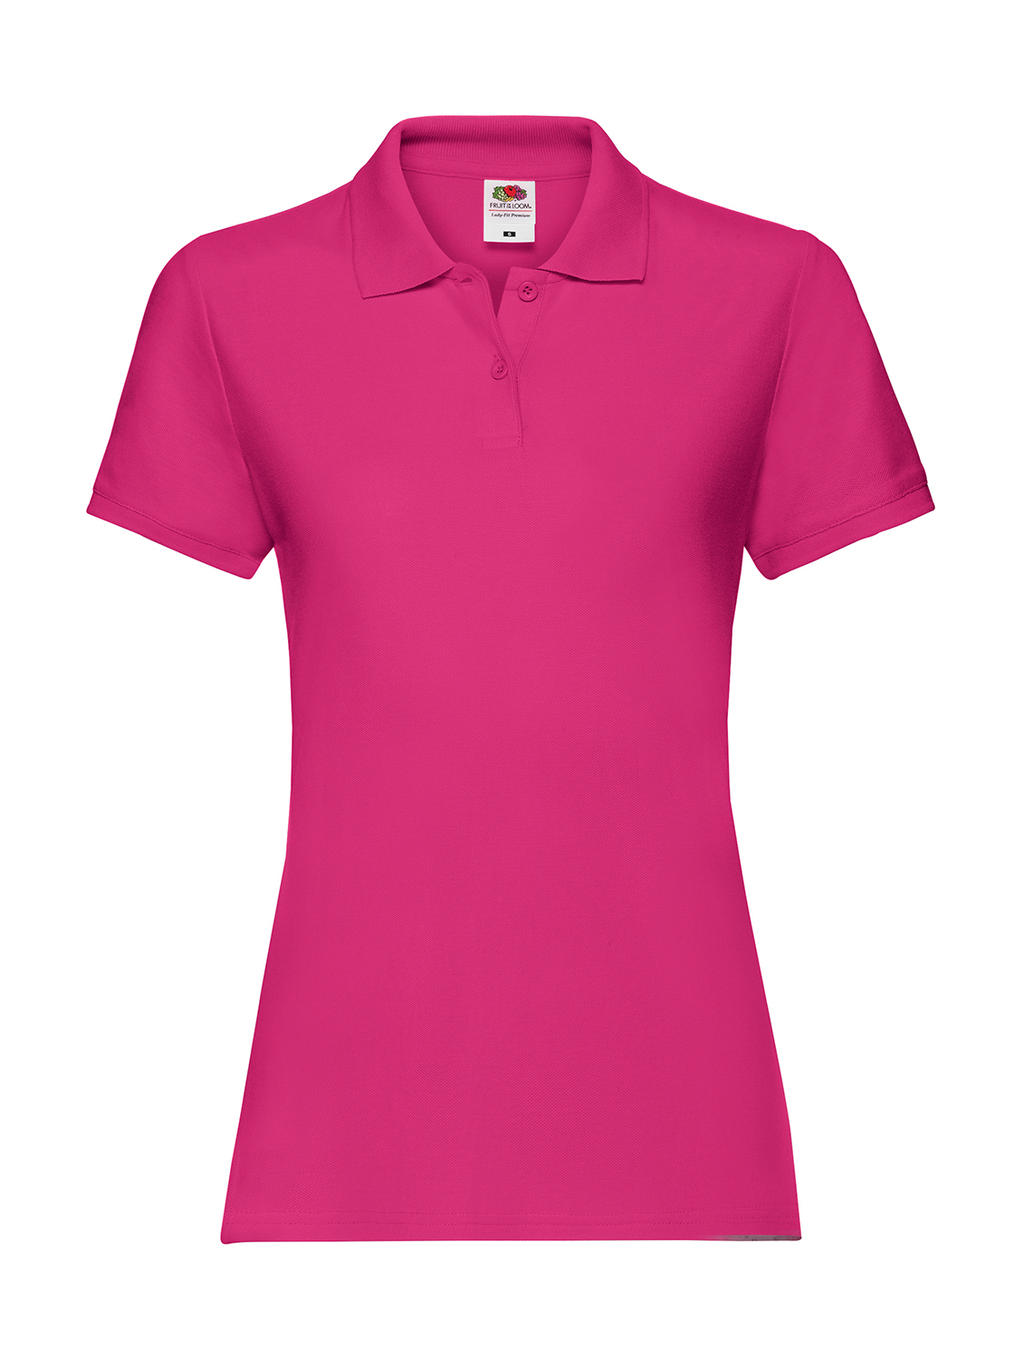  Ladies Premium Polo in Farbe Fuchsia